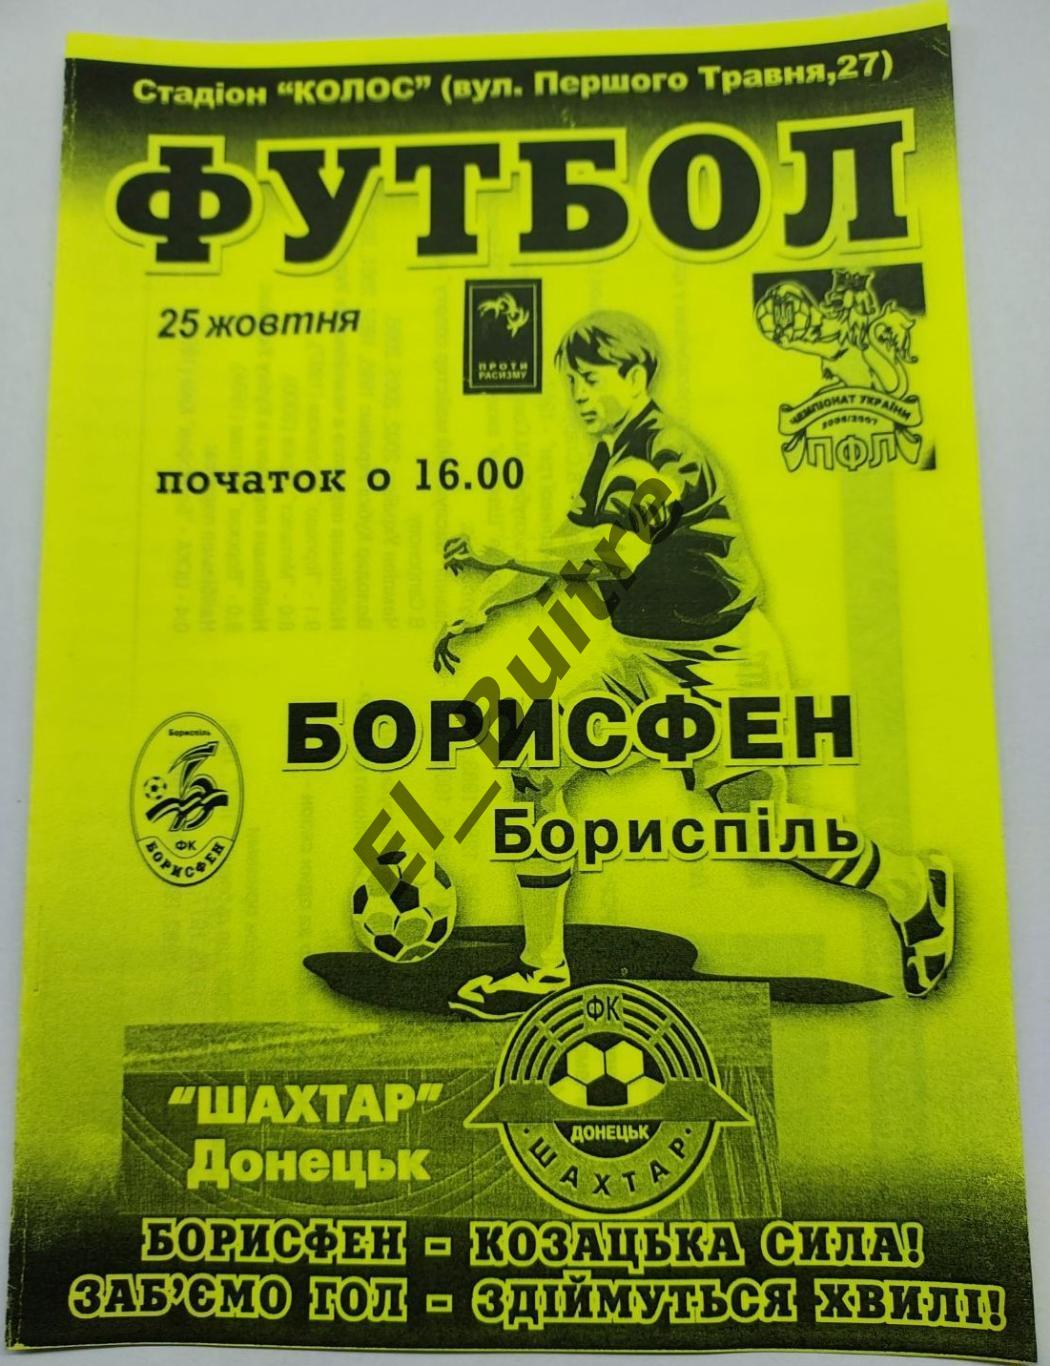 25.10.2006. Борисфен (Борисполь) - Шахтер (Донецк). Кубок Украины 2006/07.